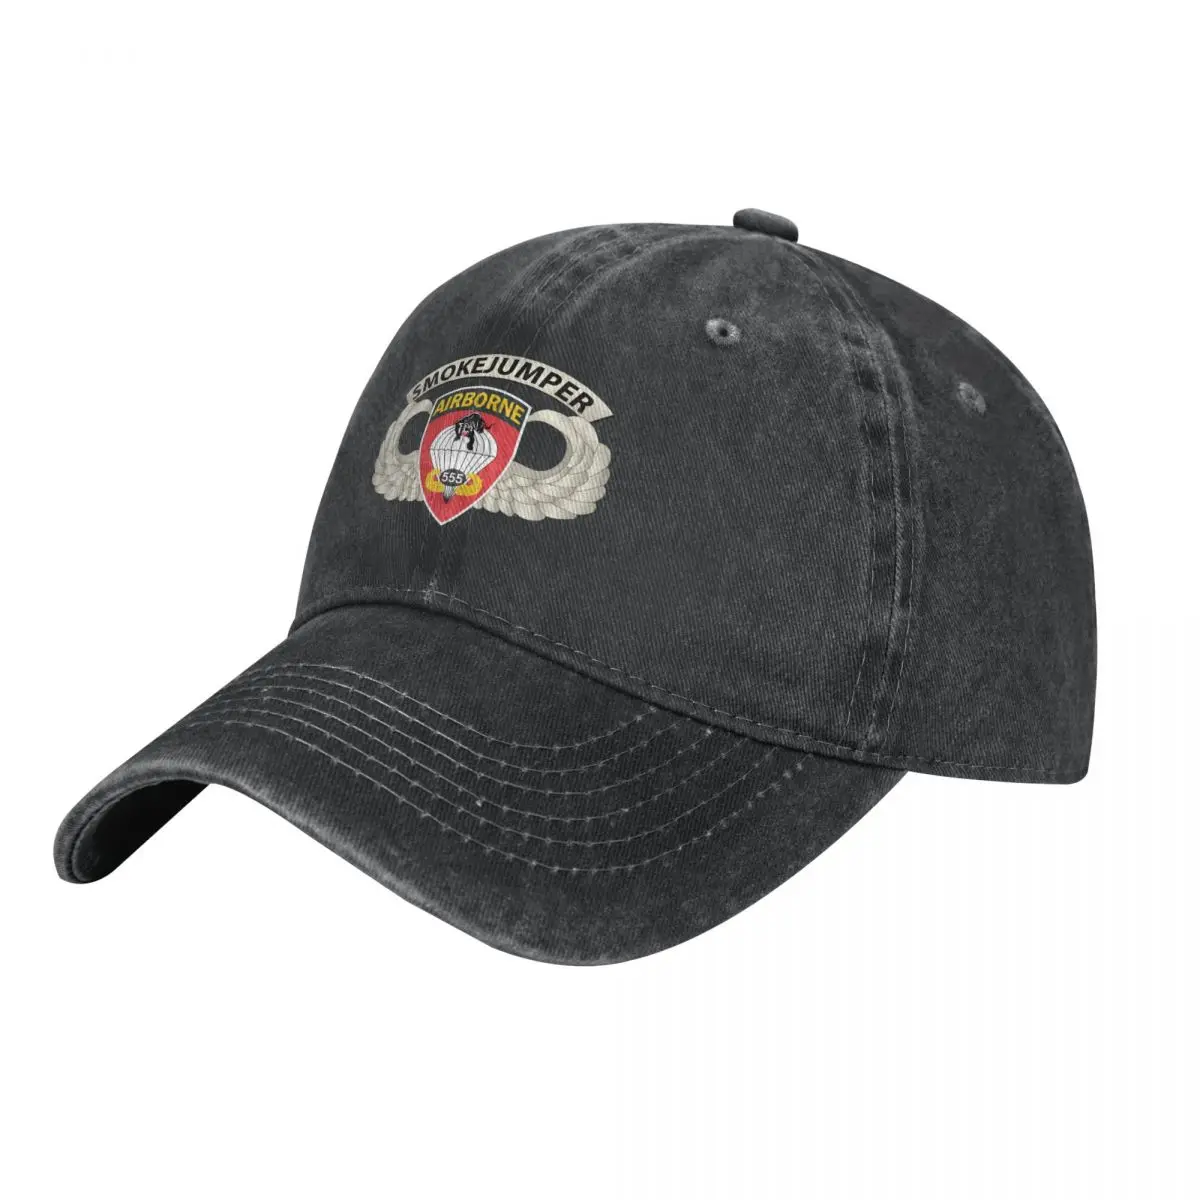 

Army - Airborne Badge - 555th Parachute Infantry Bn - SSI w SmokeJumper Tab X 300 Cowboy Hat Custom Cap Female Men's